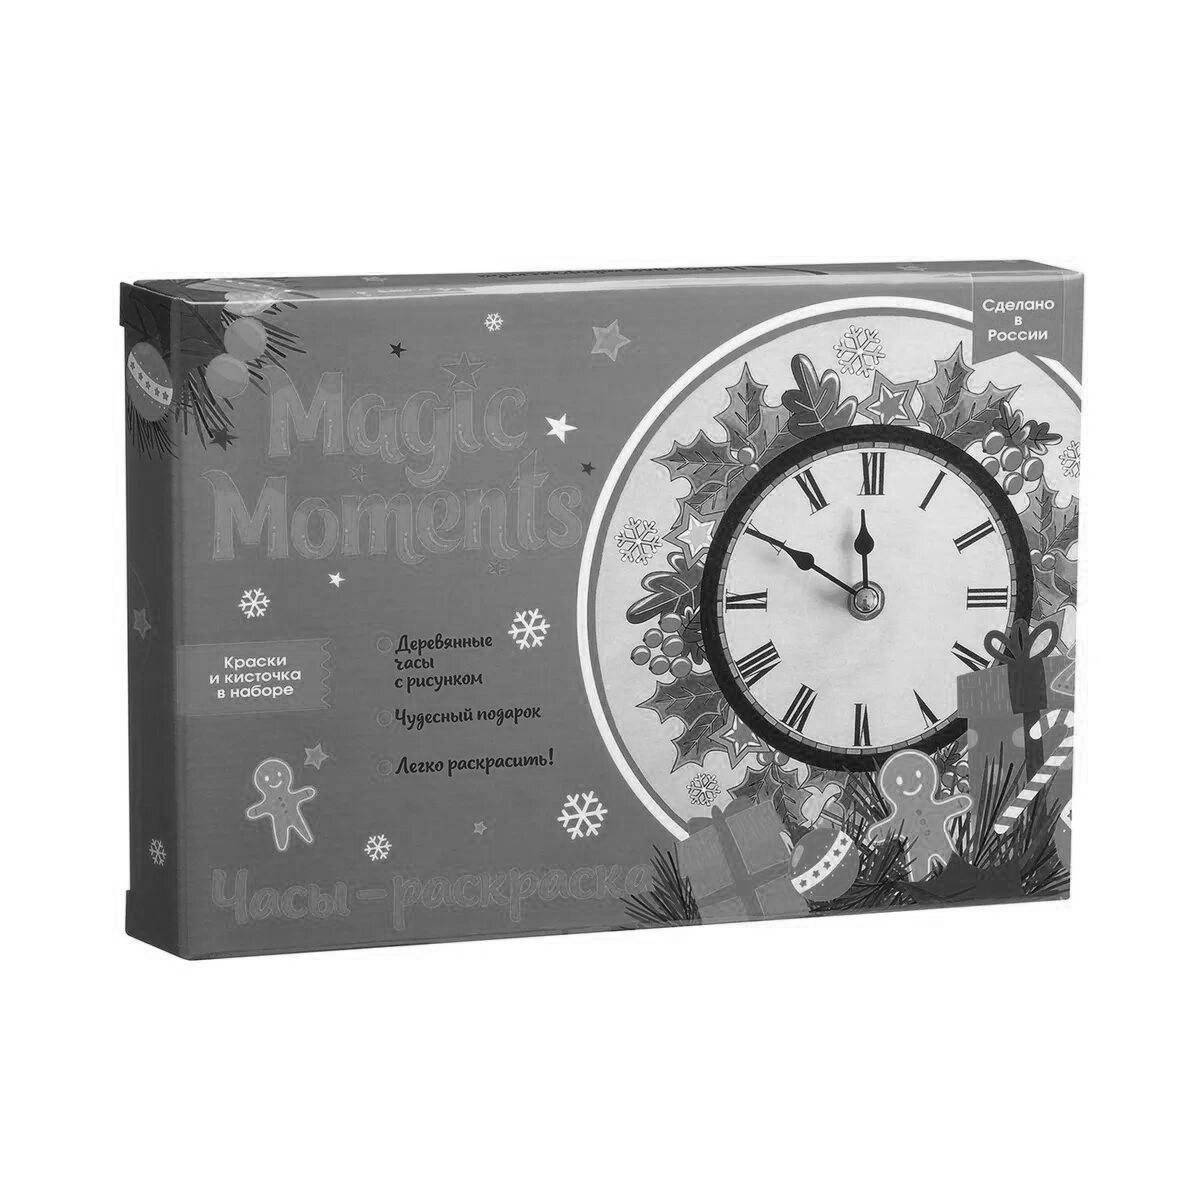 Wonderful coloring clock magic moments